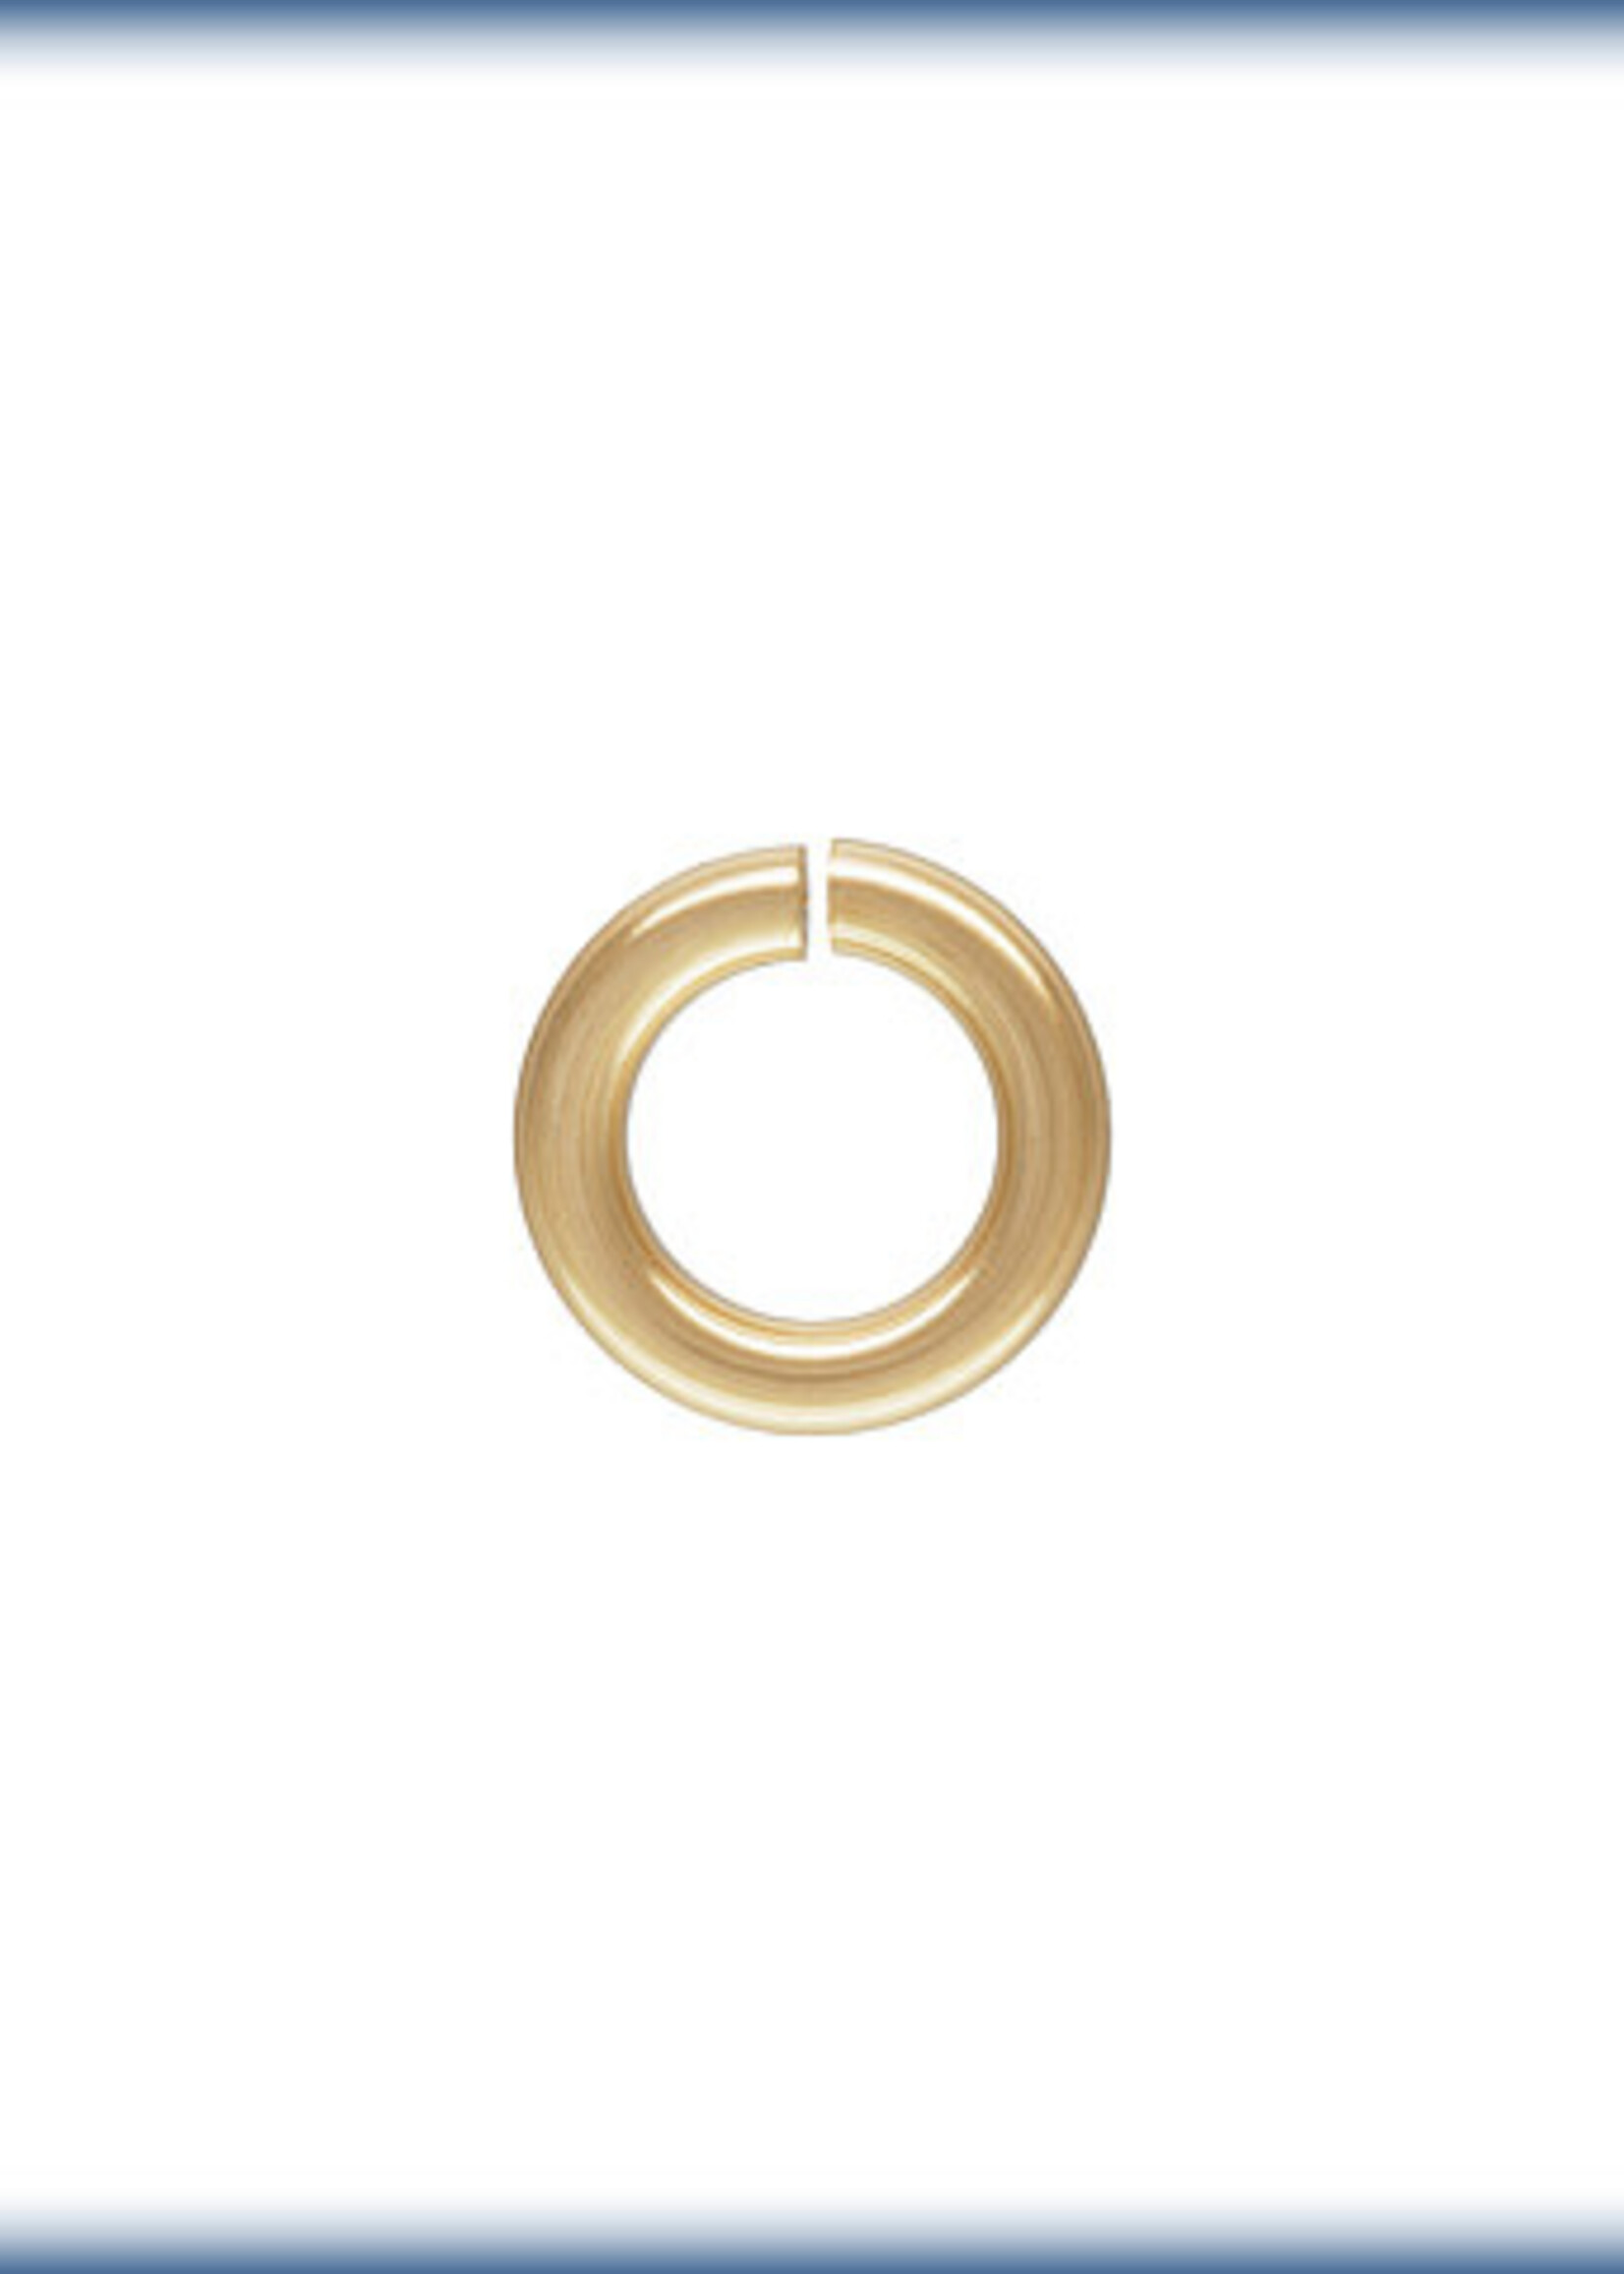 5mm Jump Ring 18ga 14k Gold Filled Qty 6